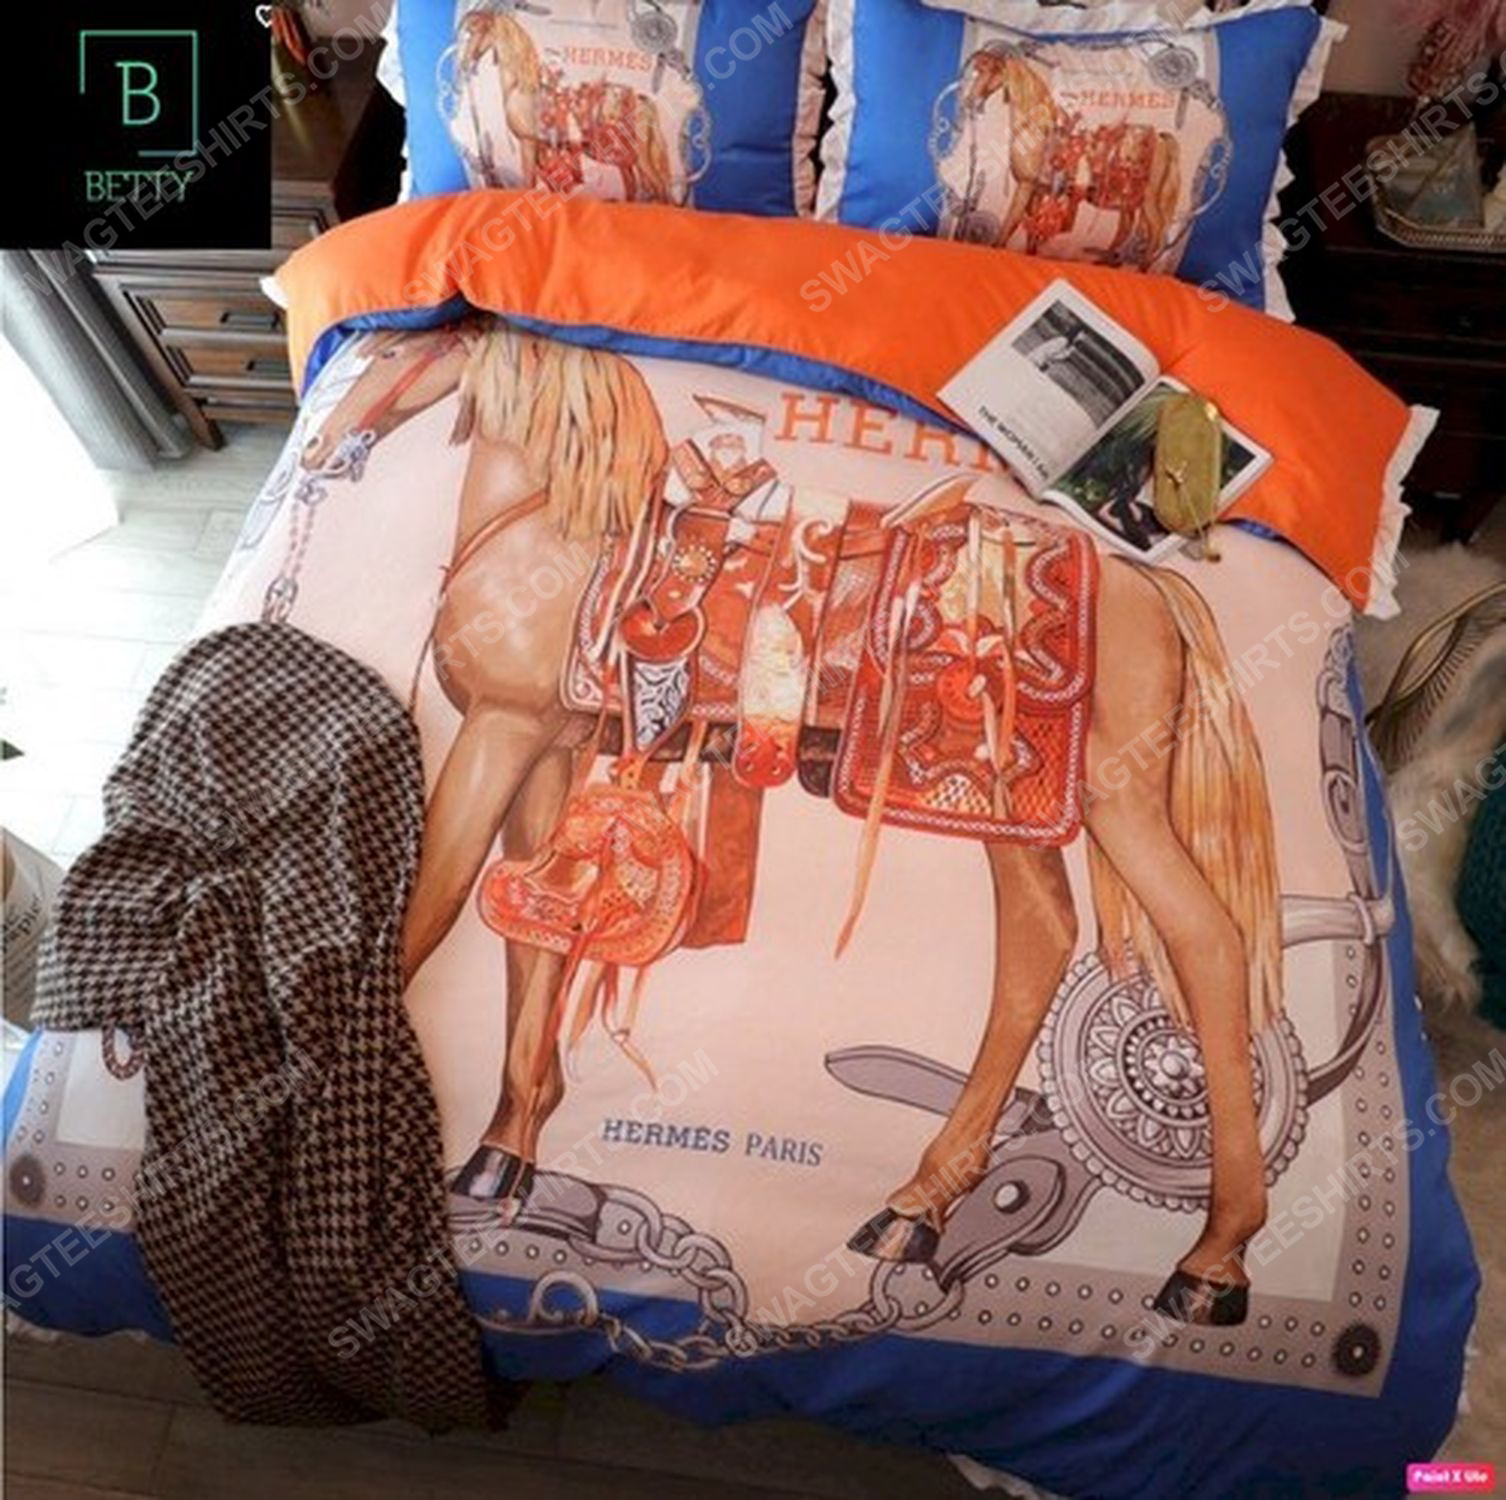 Hermes and horse symbol full print duvet cover bedding set 2 - Copy